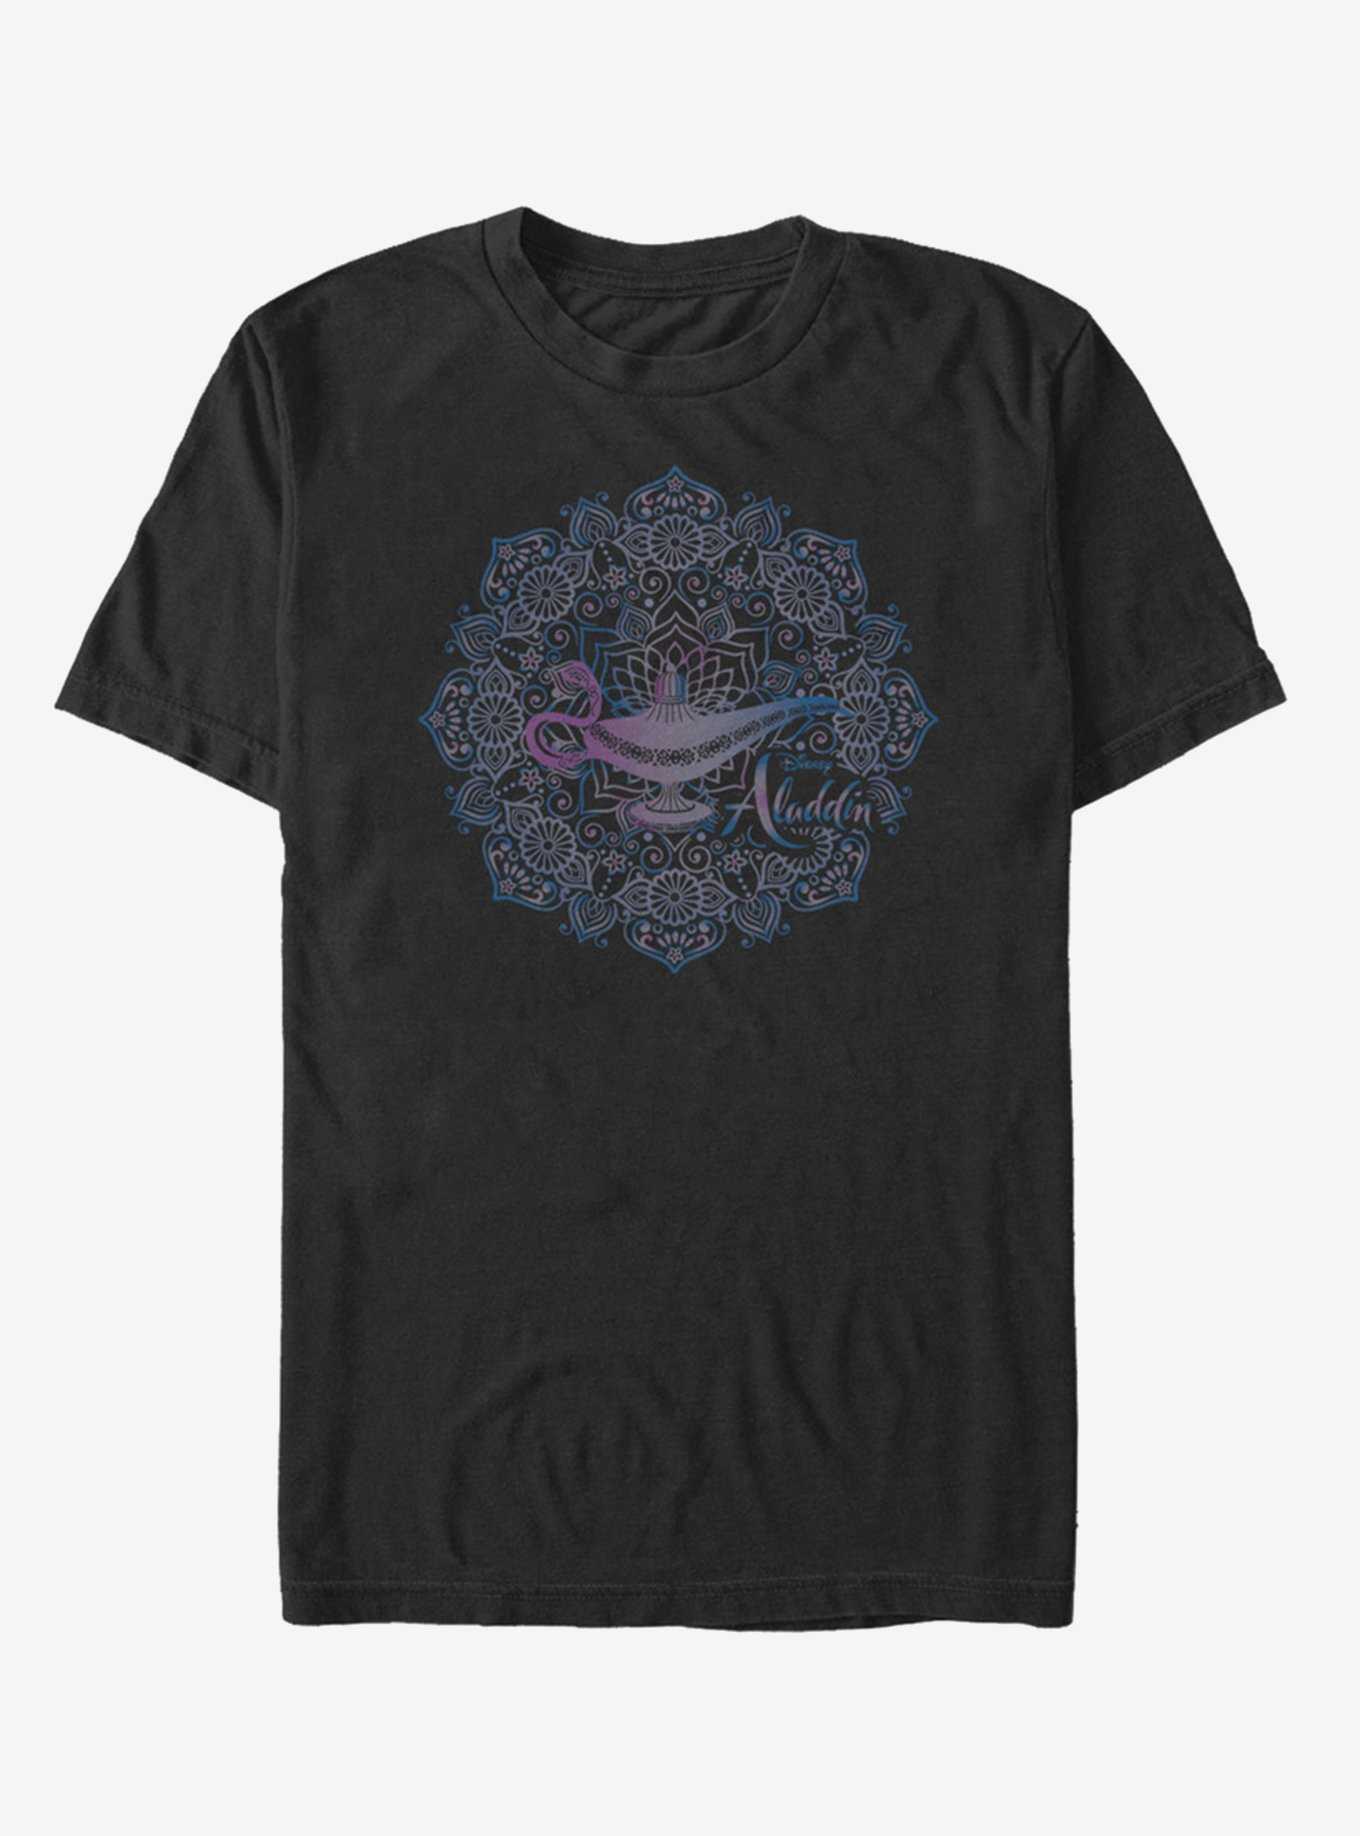 Disney Aladdin 2019 Lamp Mandala T-Shirt, , hi-res